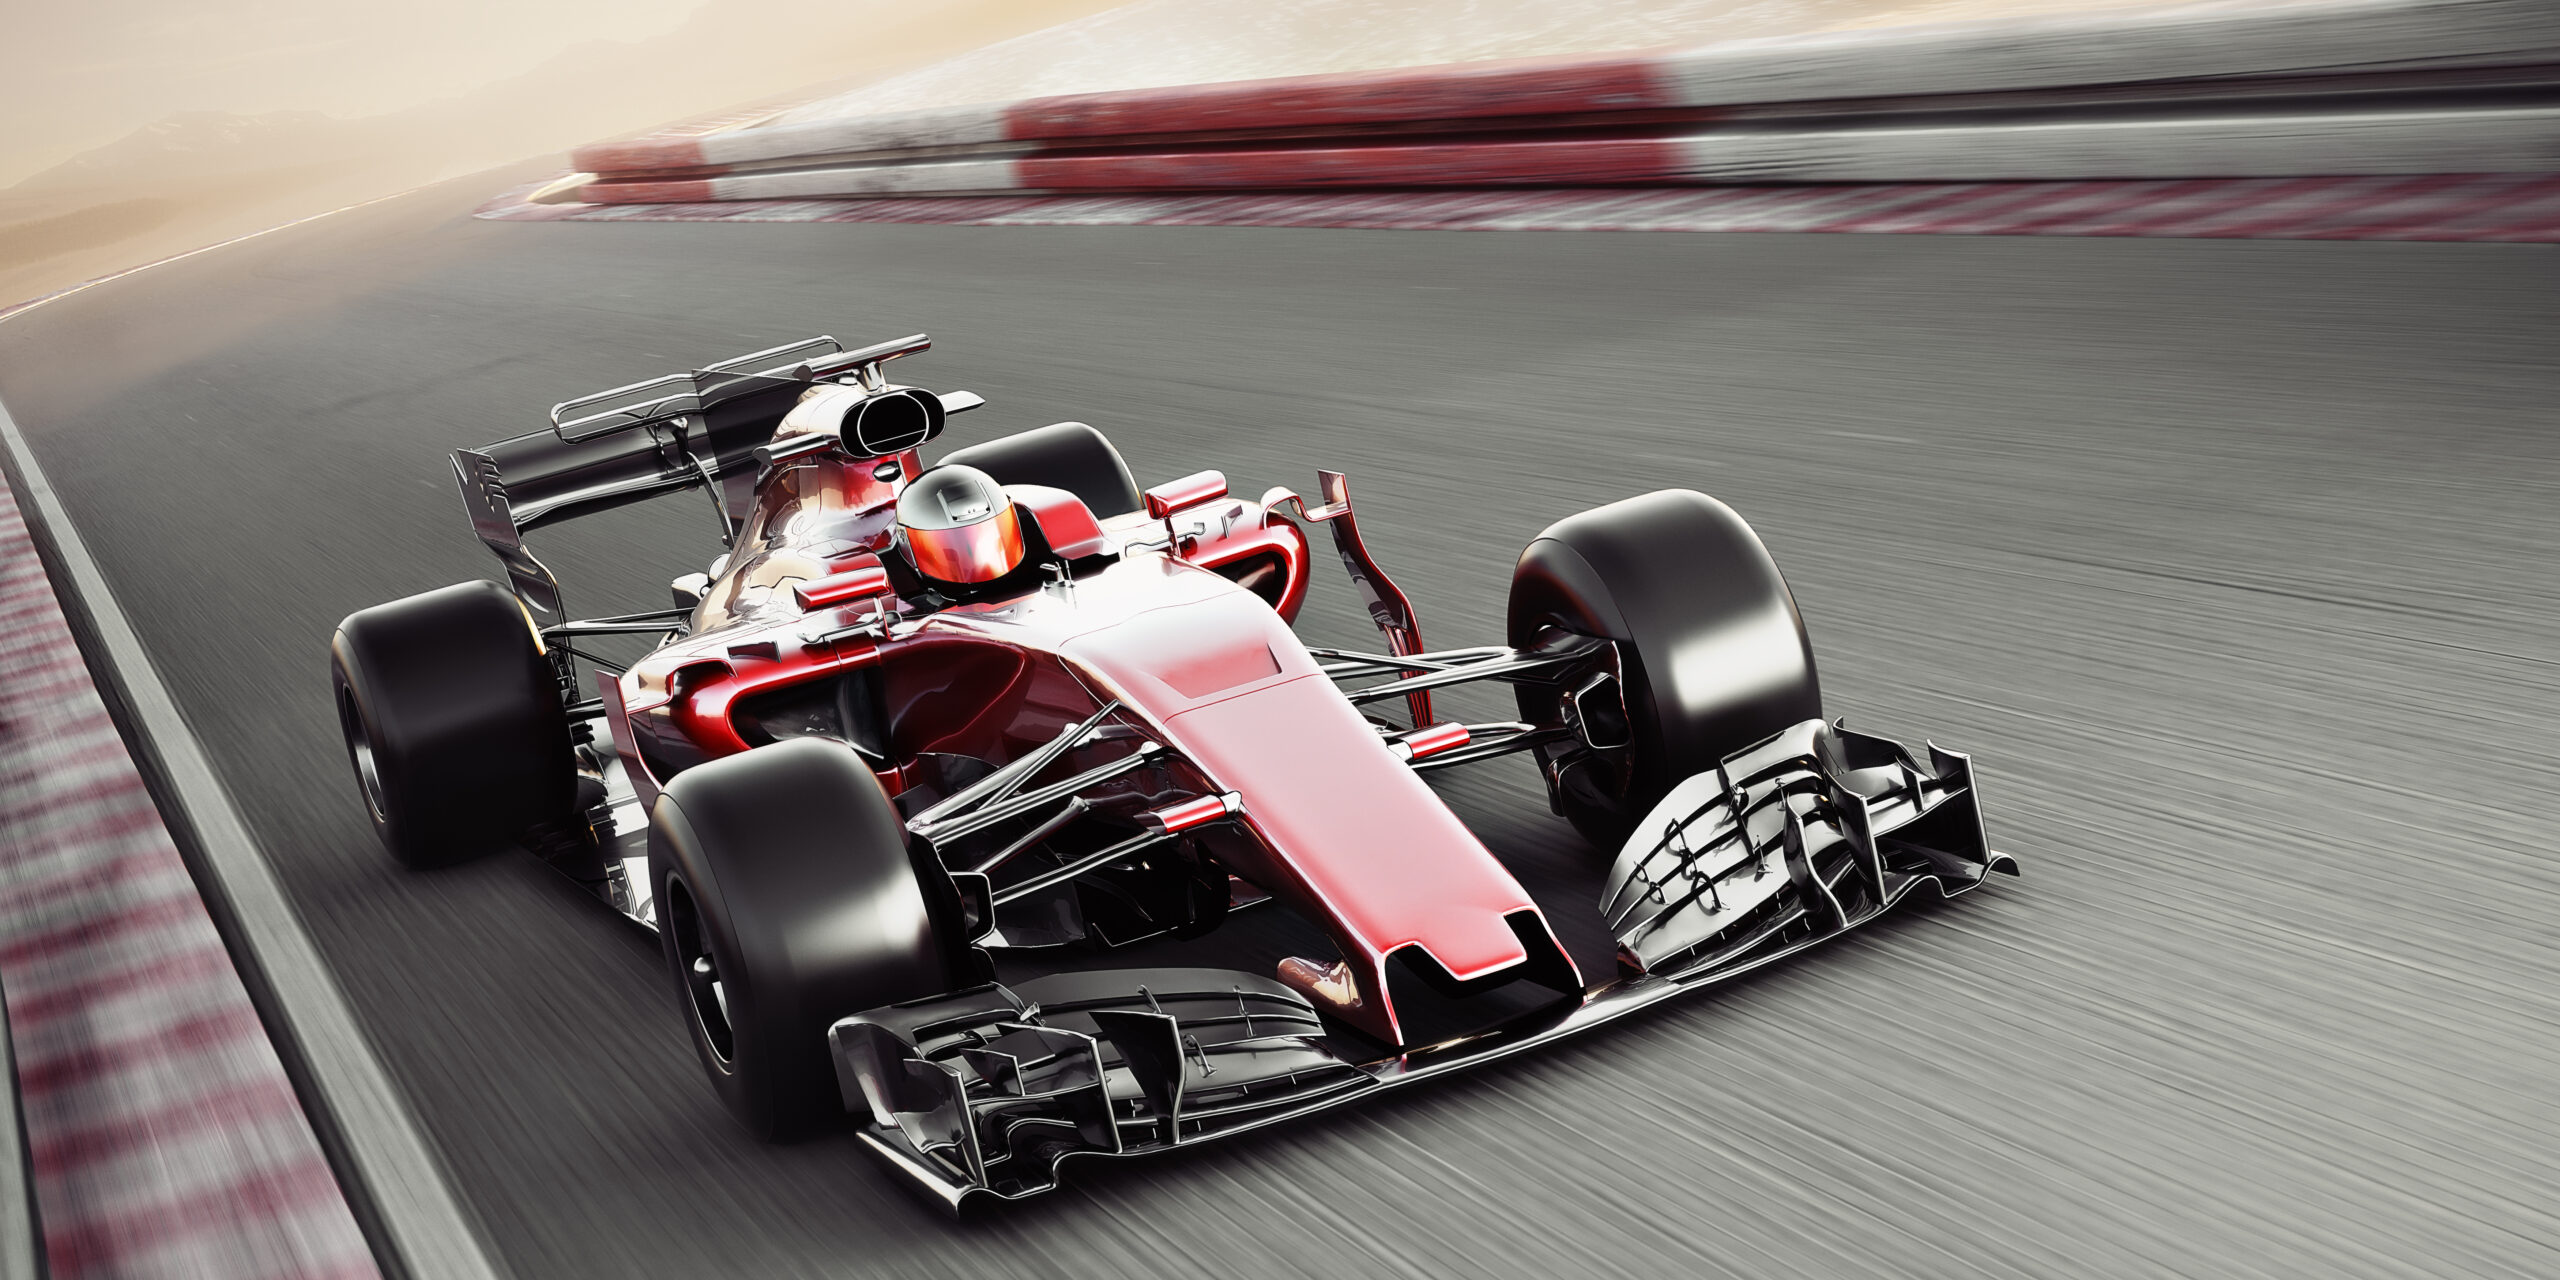 F1 Race Car on Track